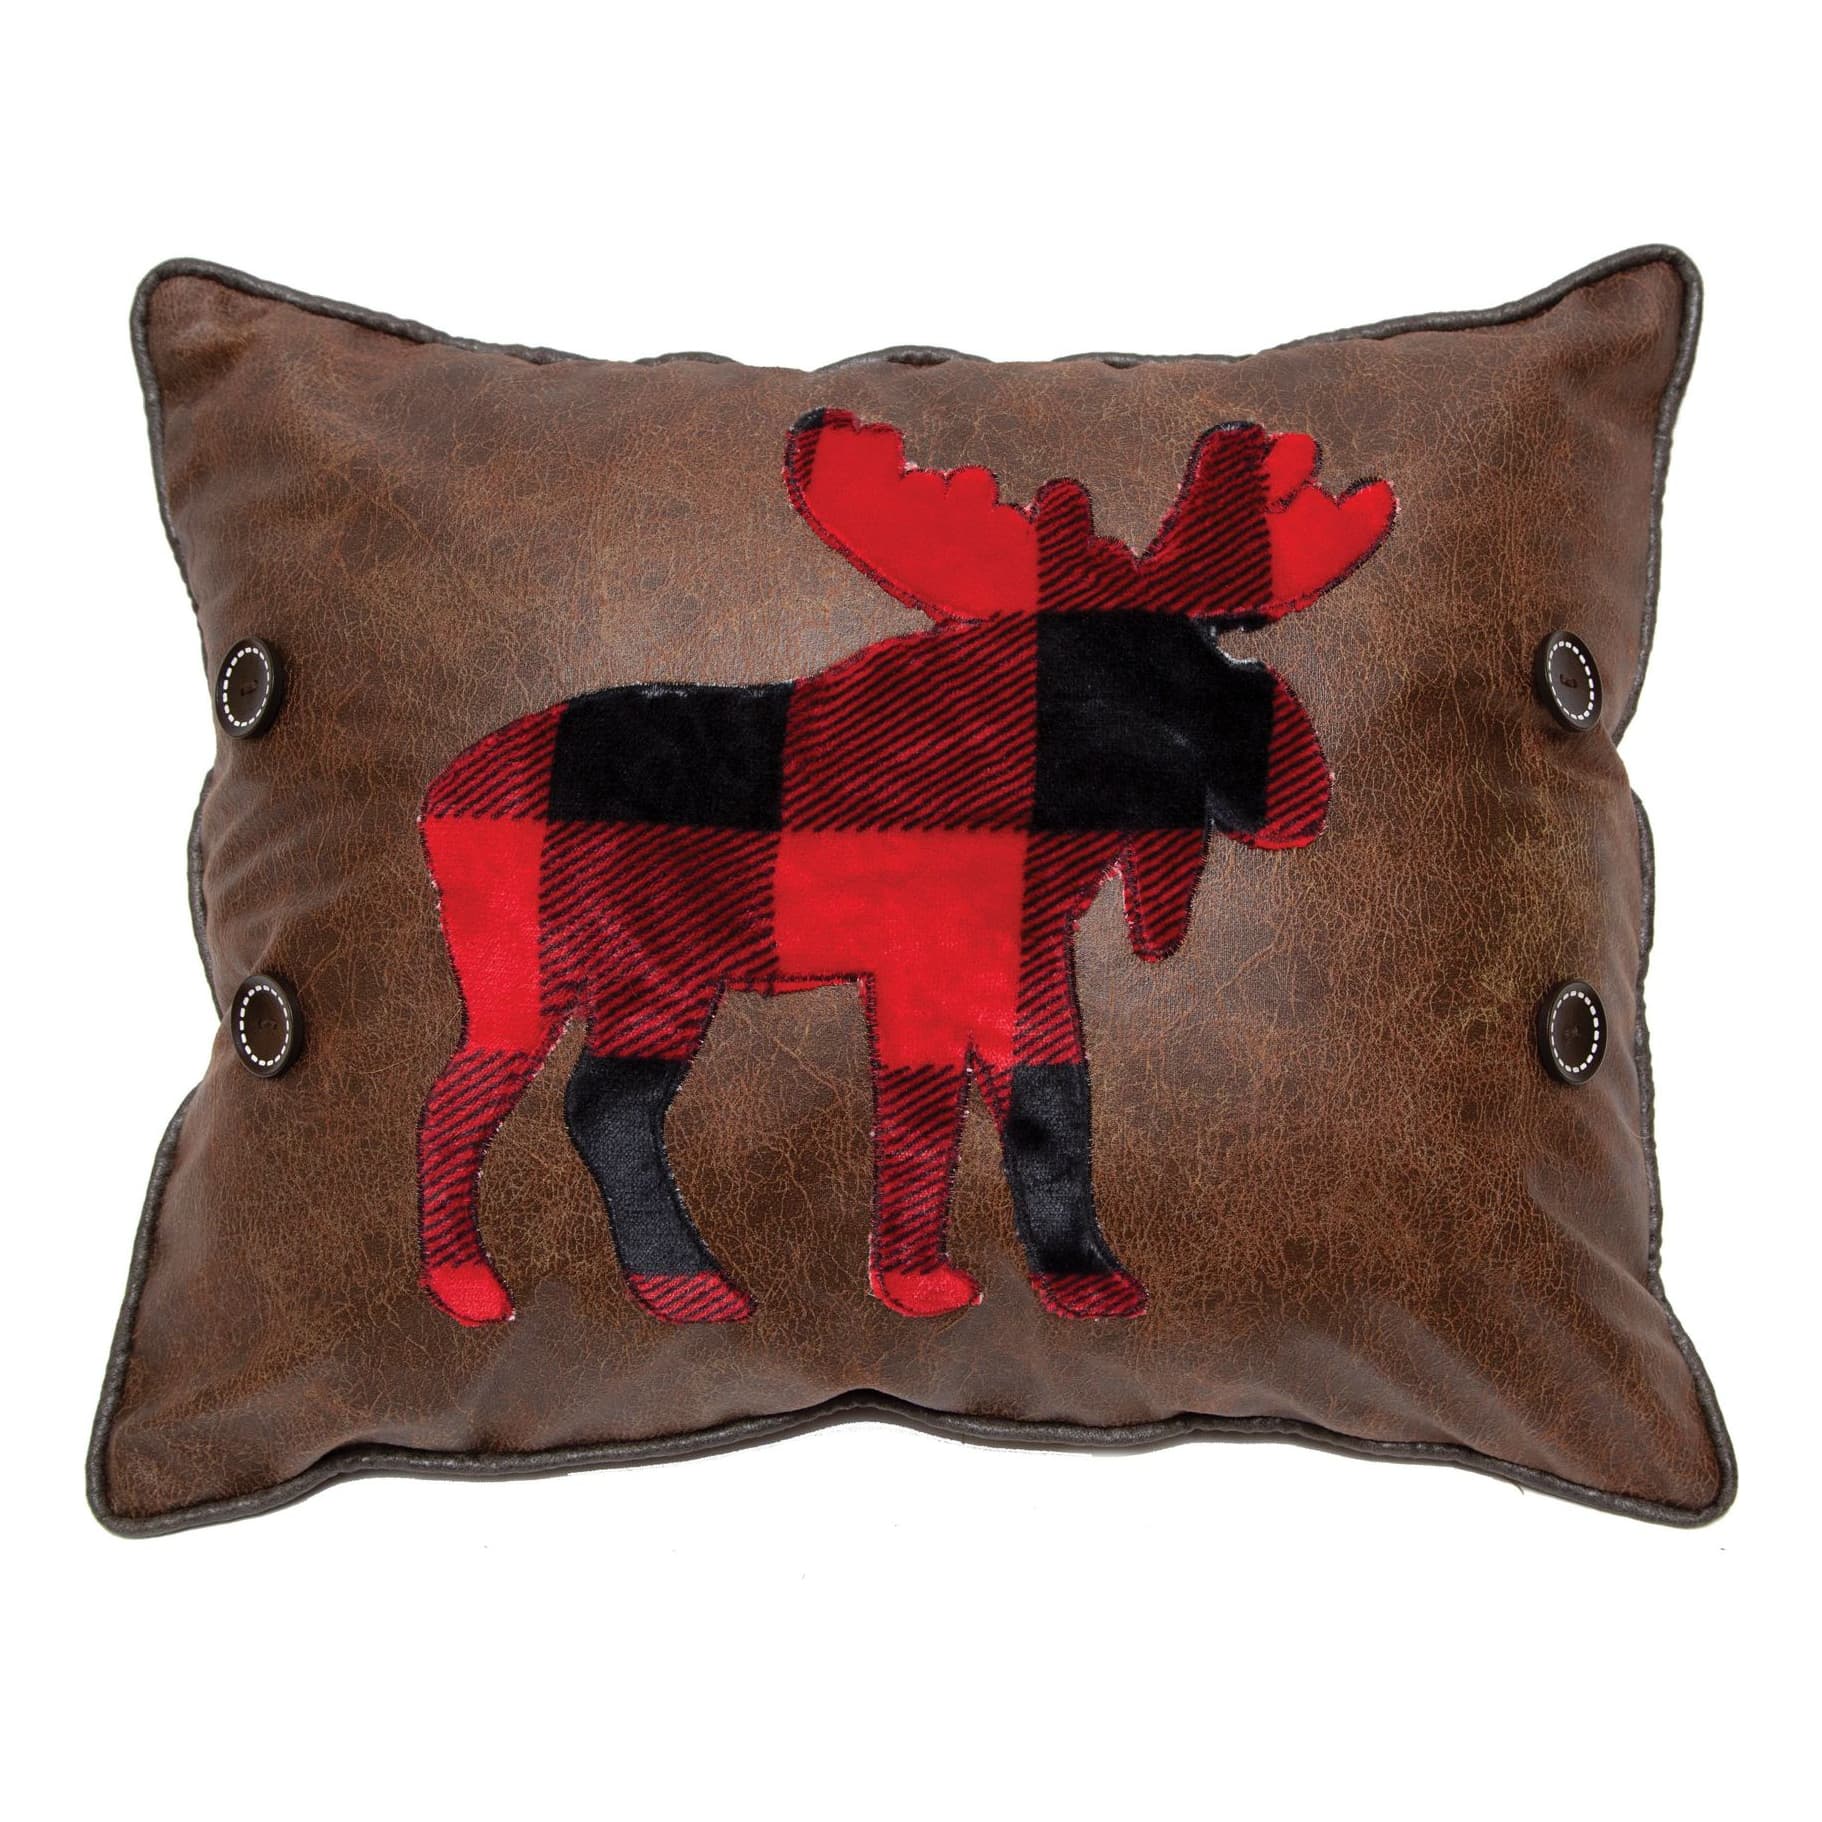 Carstens Inc. Lumberjack Moose Decorative Accent Pillow